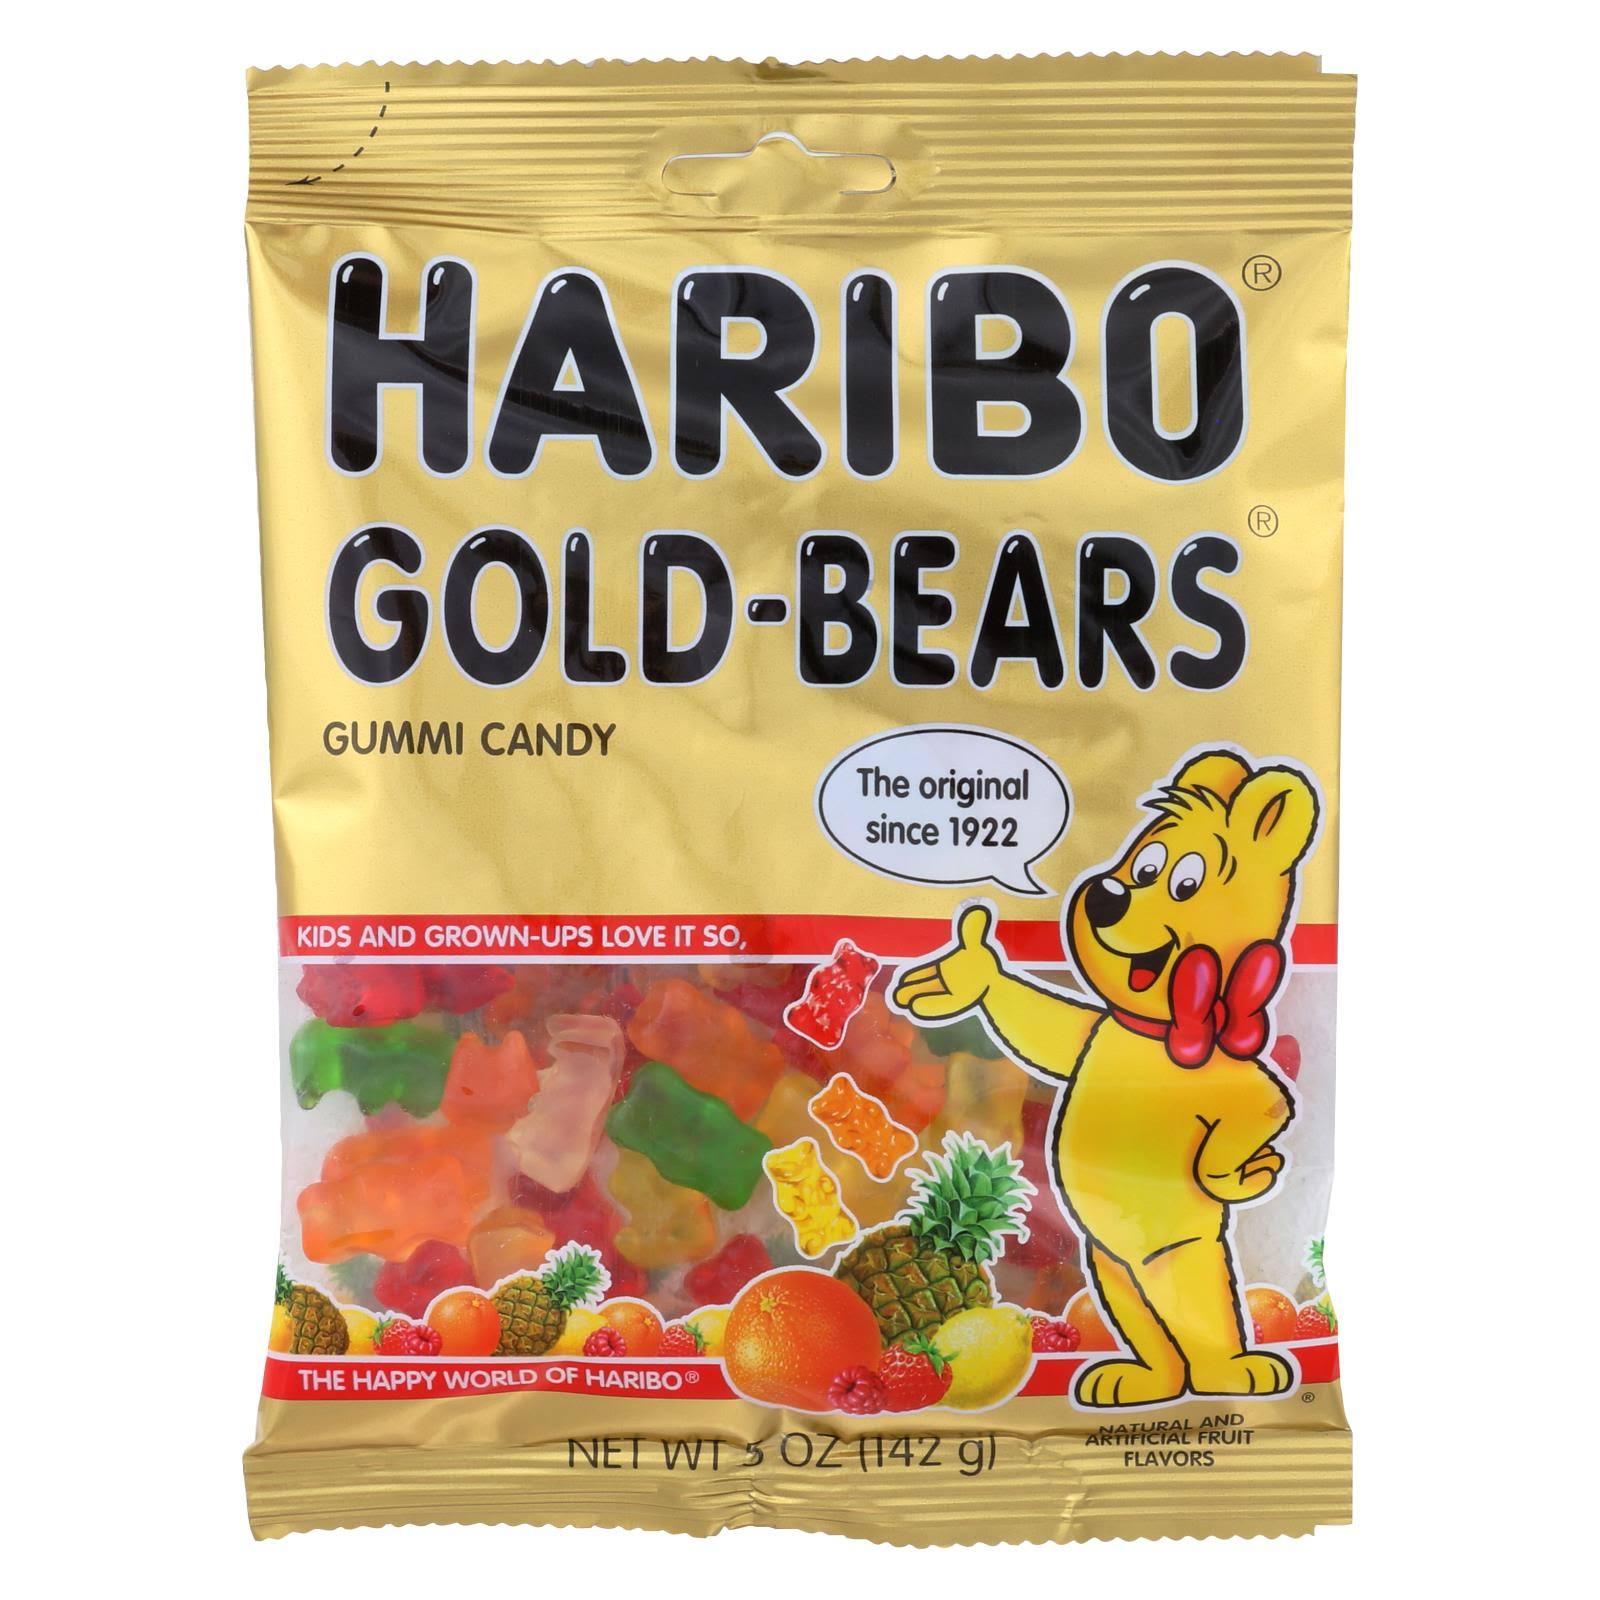 Haribo Gold Bears Gummi Candy - 5oz